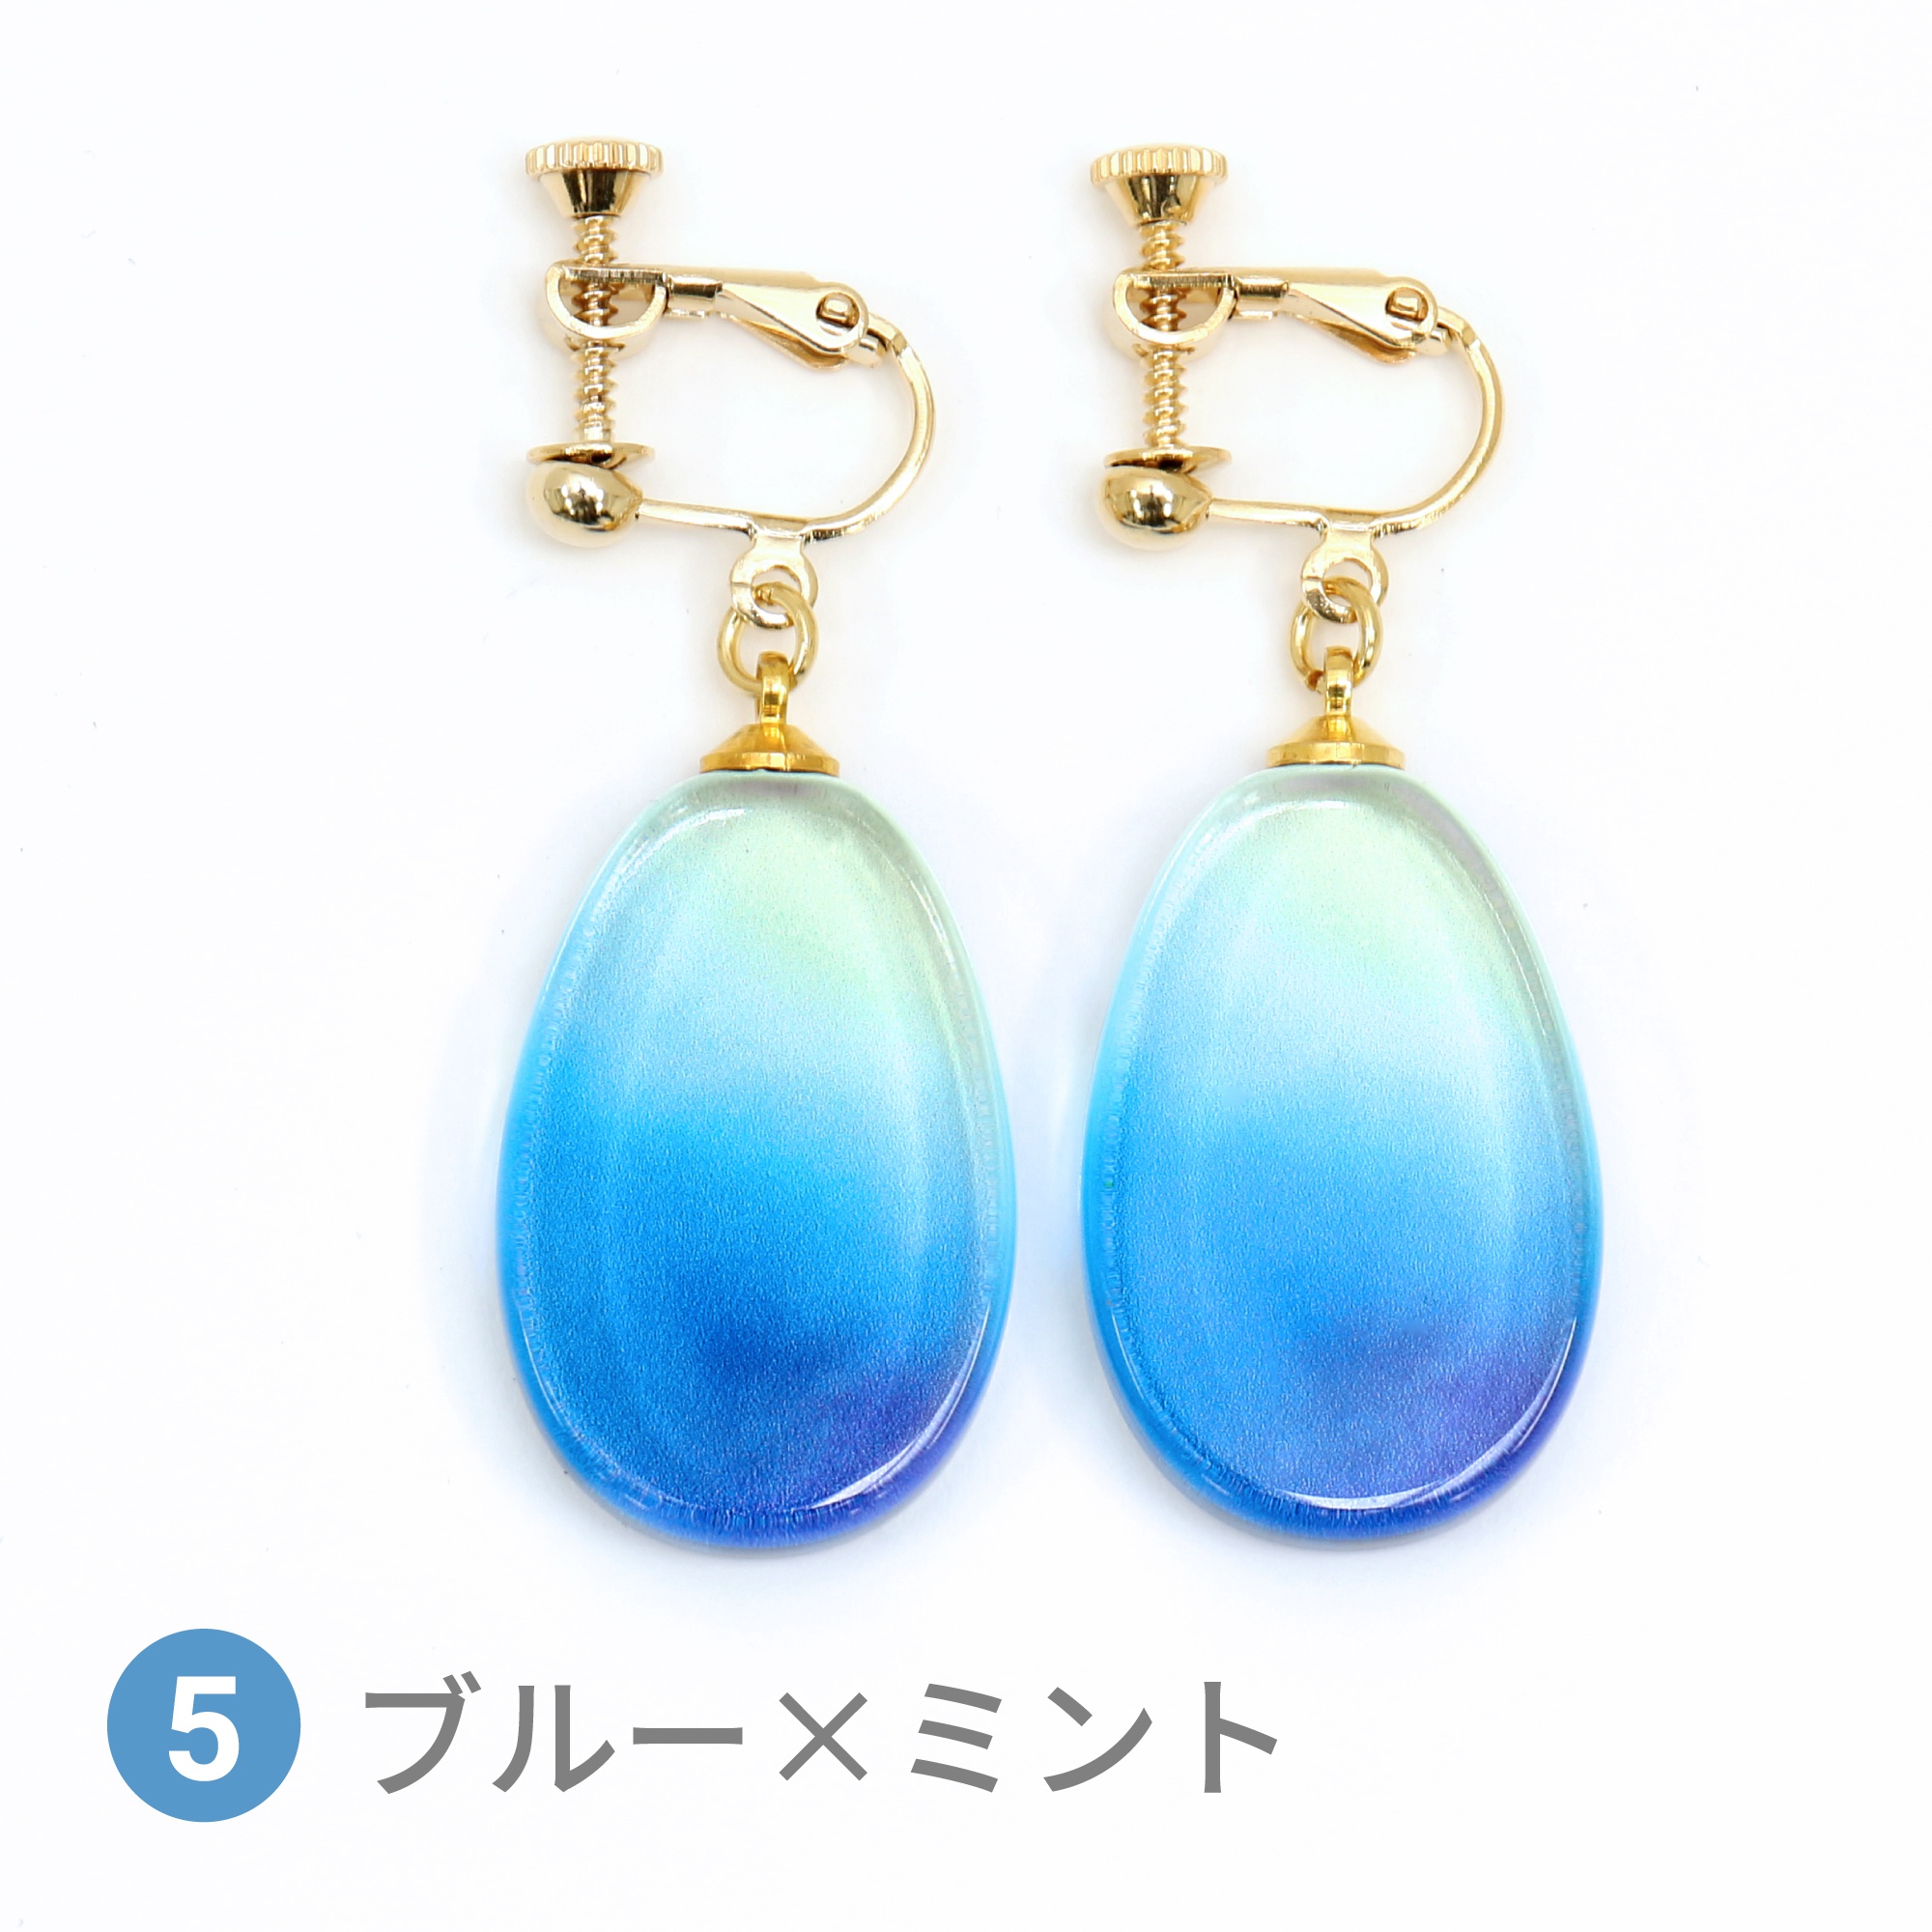 Glass accessories Earring AURORA blue&mint drop shape